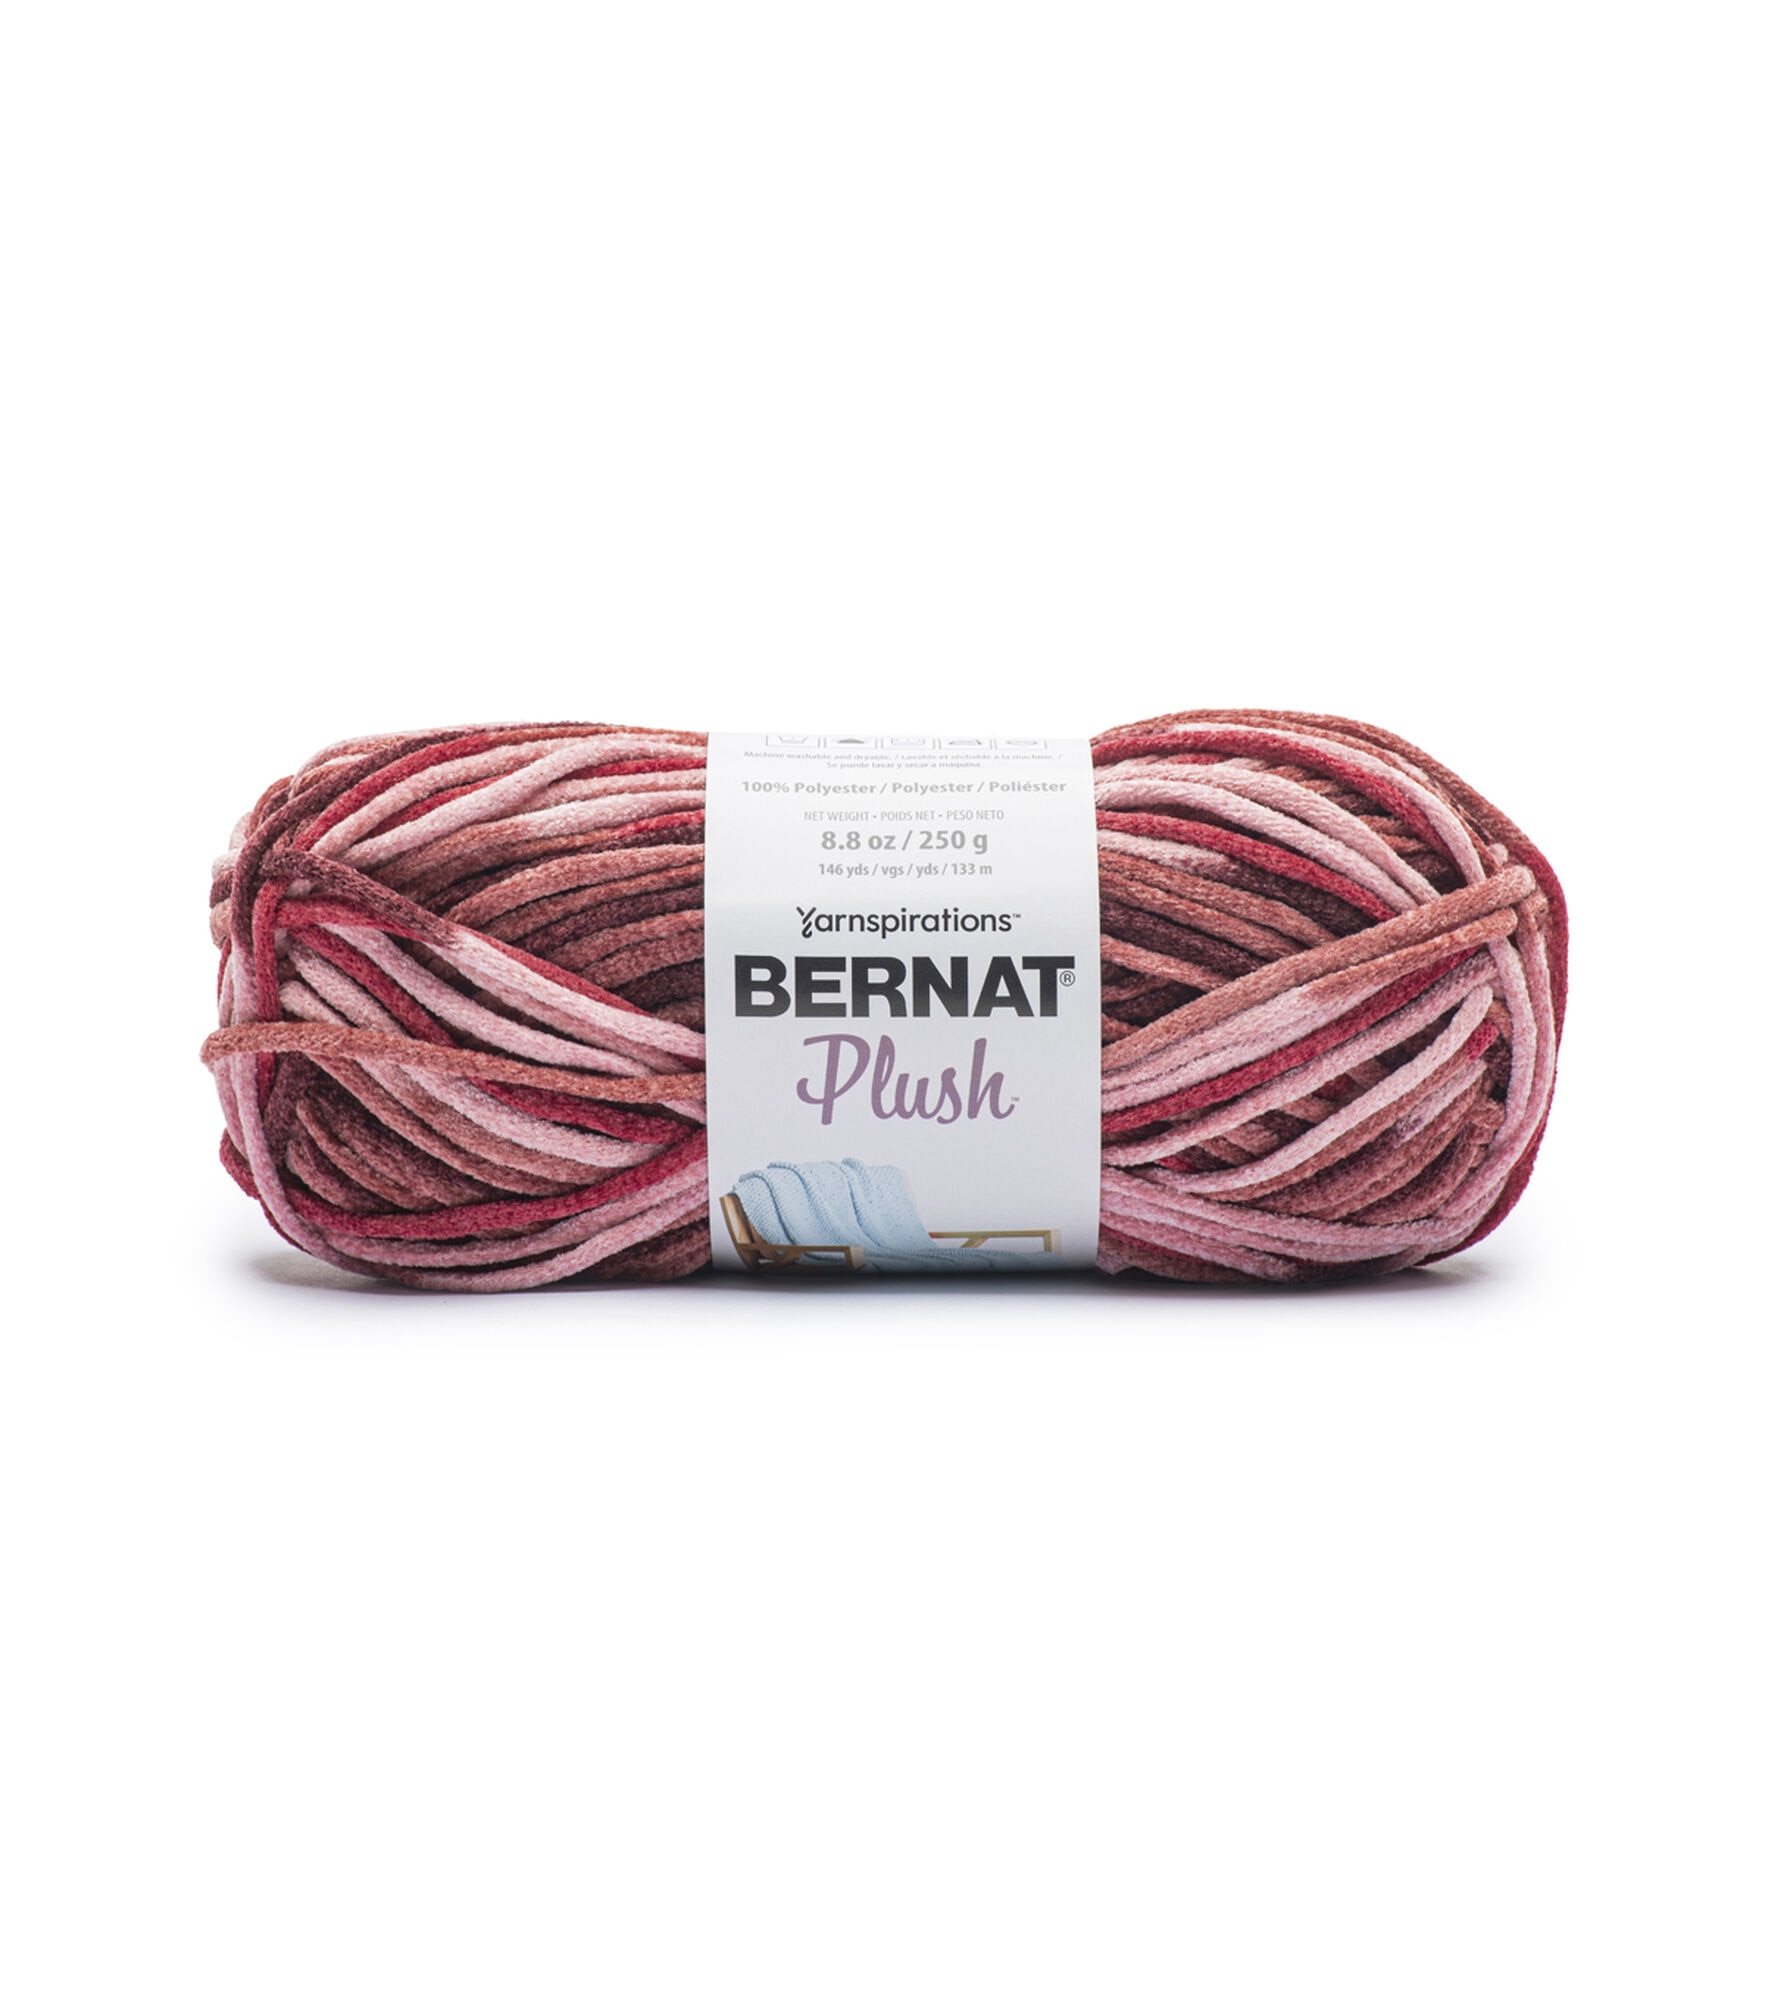 Bernat Blanket Extra Thick Yarn, JOANN